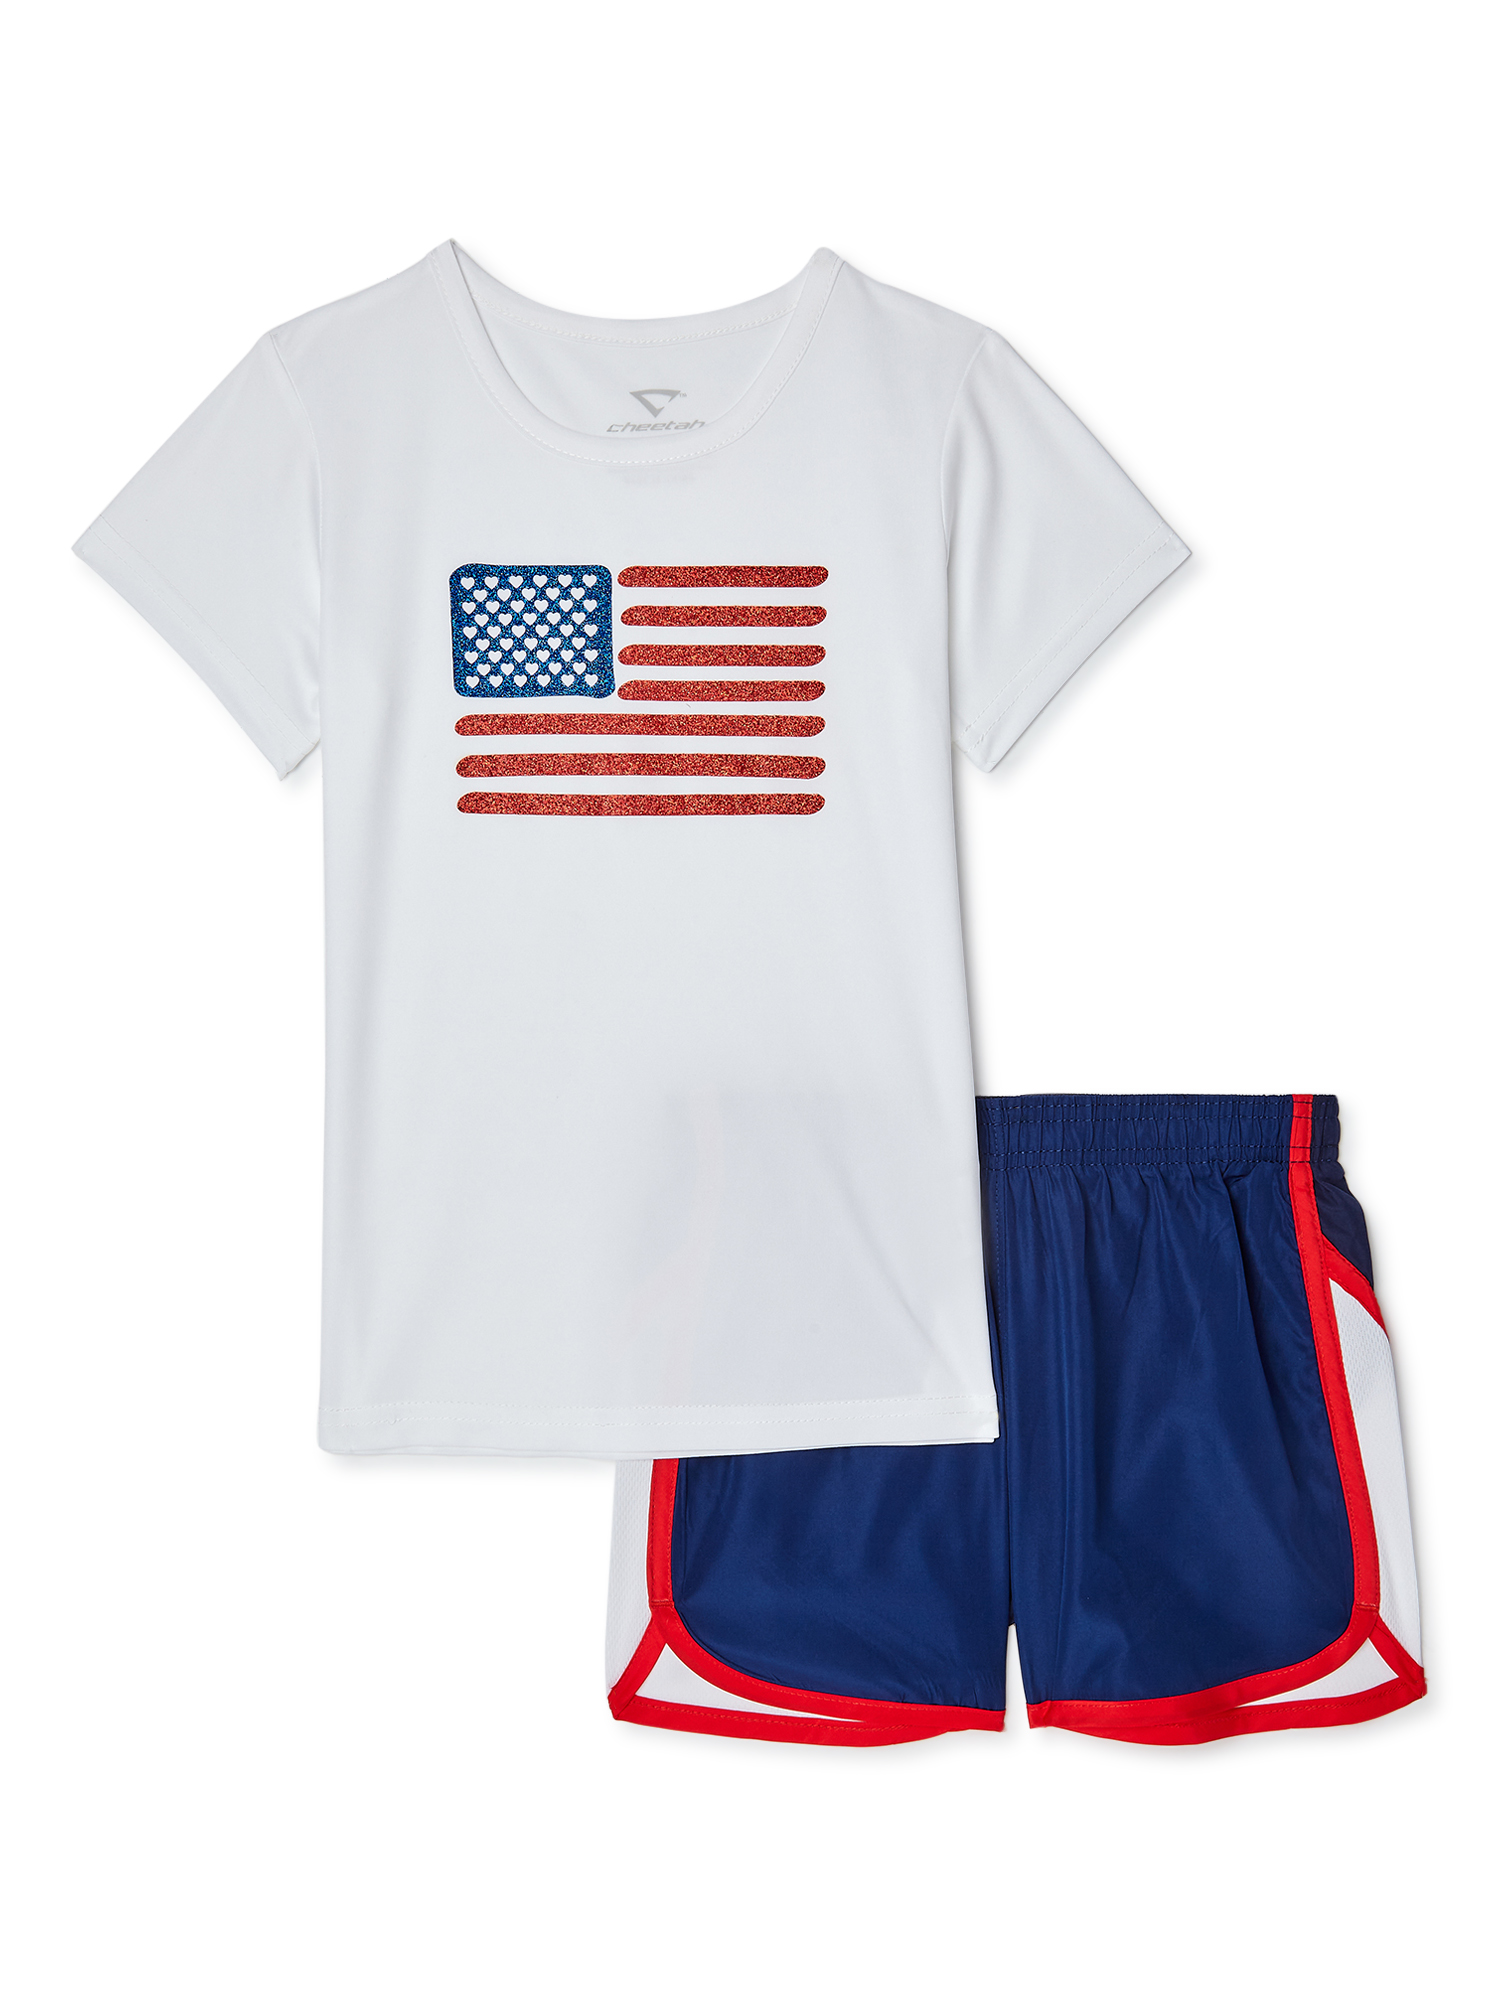 Cheetah Girls Americana USA Graphic T-Shirt and Shorts 2 Piece Set